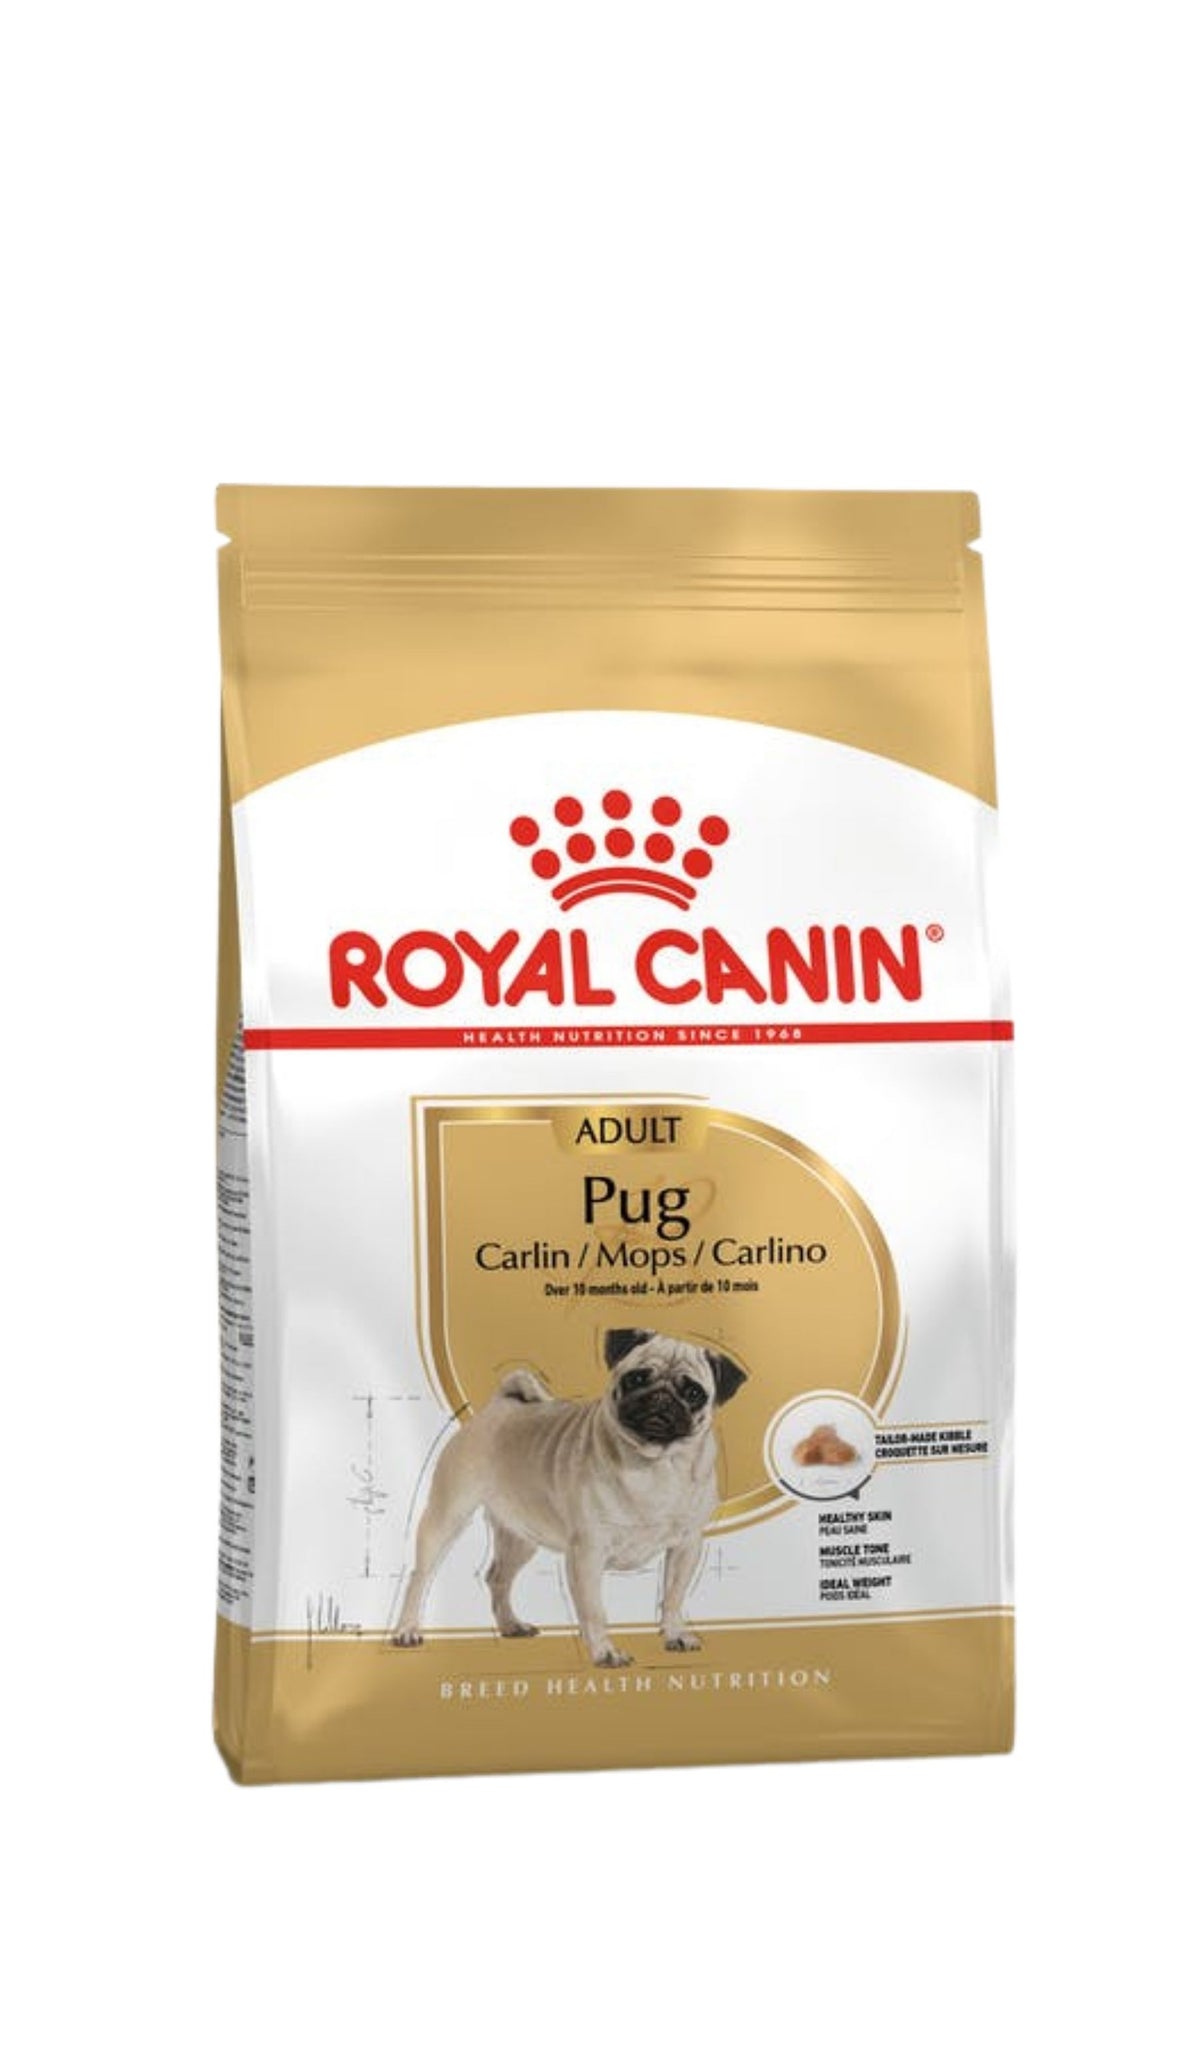 Royal Canin Pug Adult 1.5kg